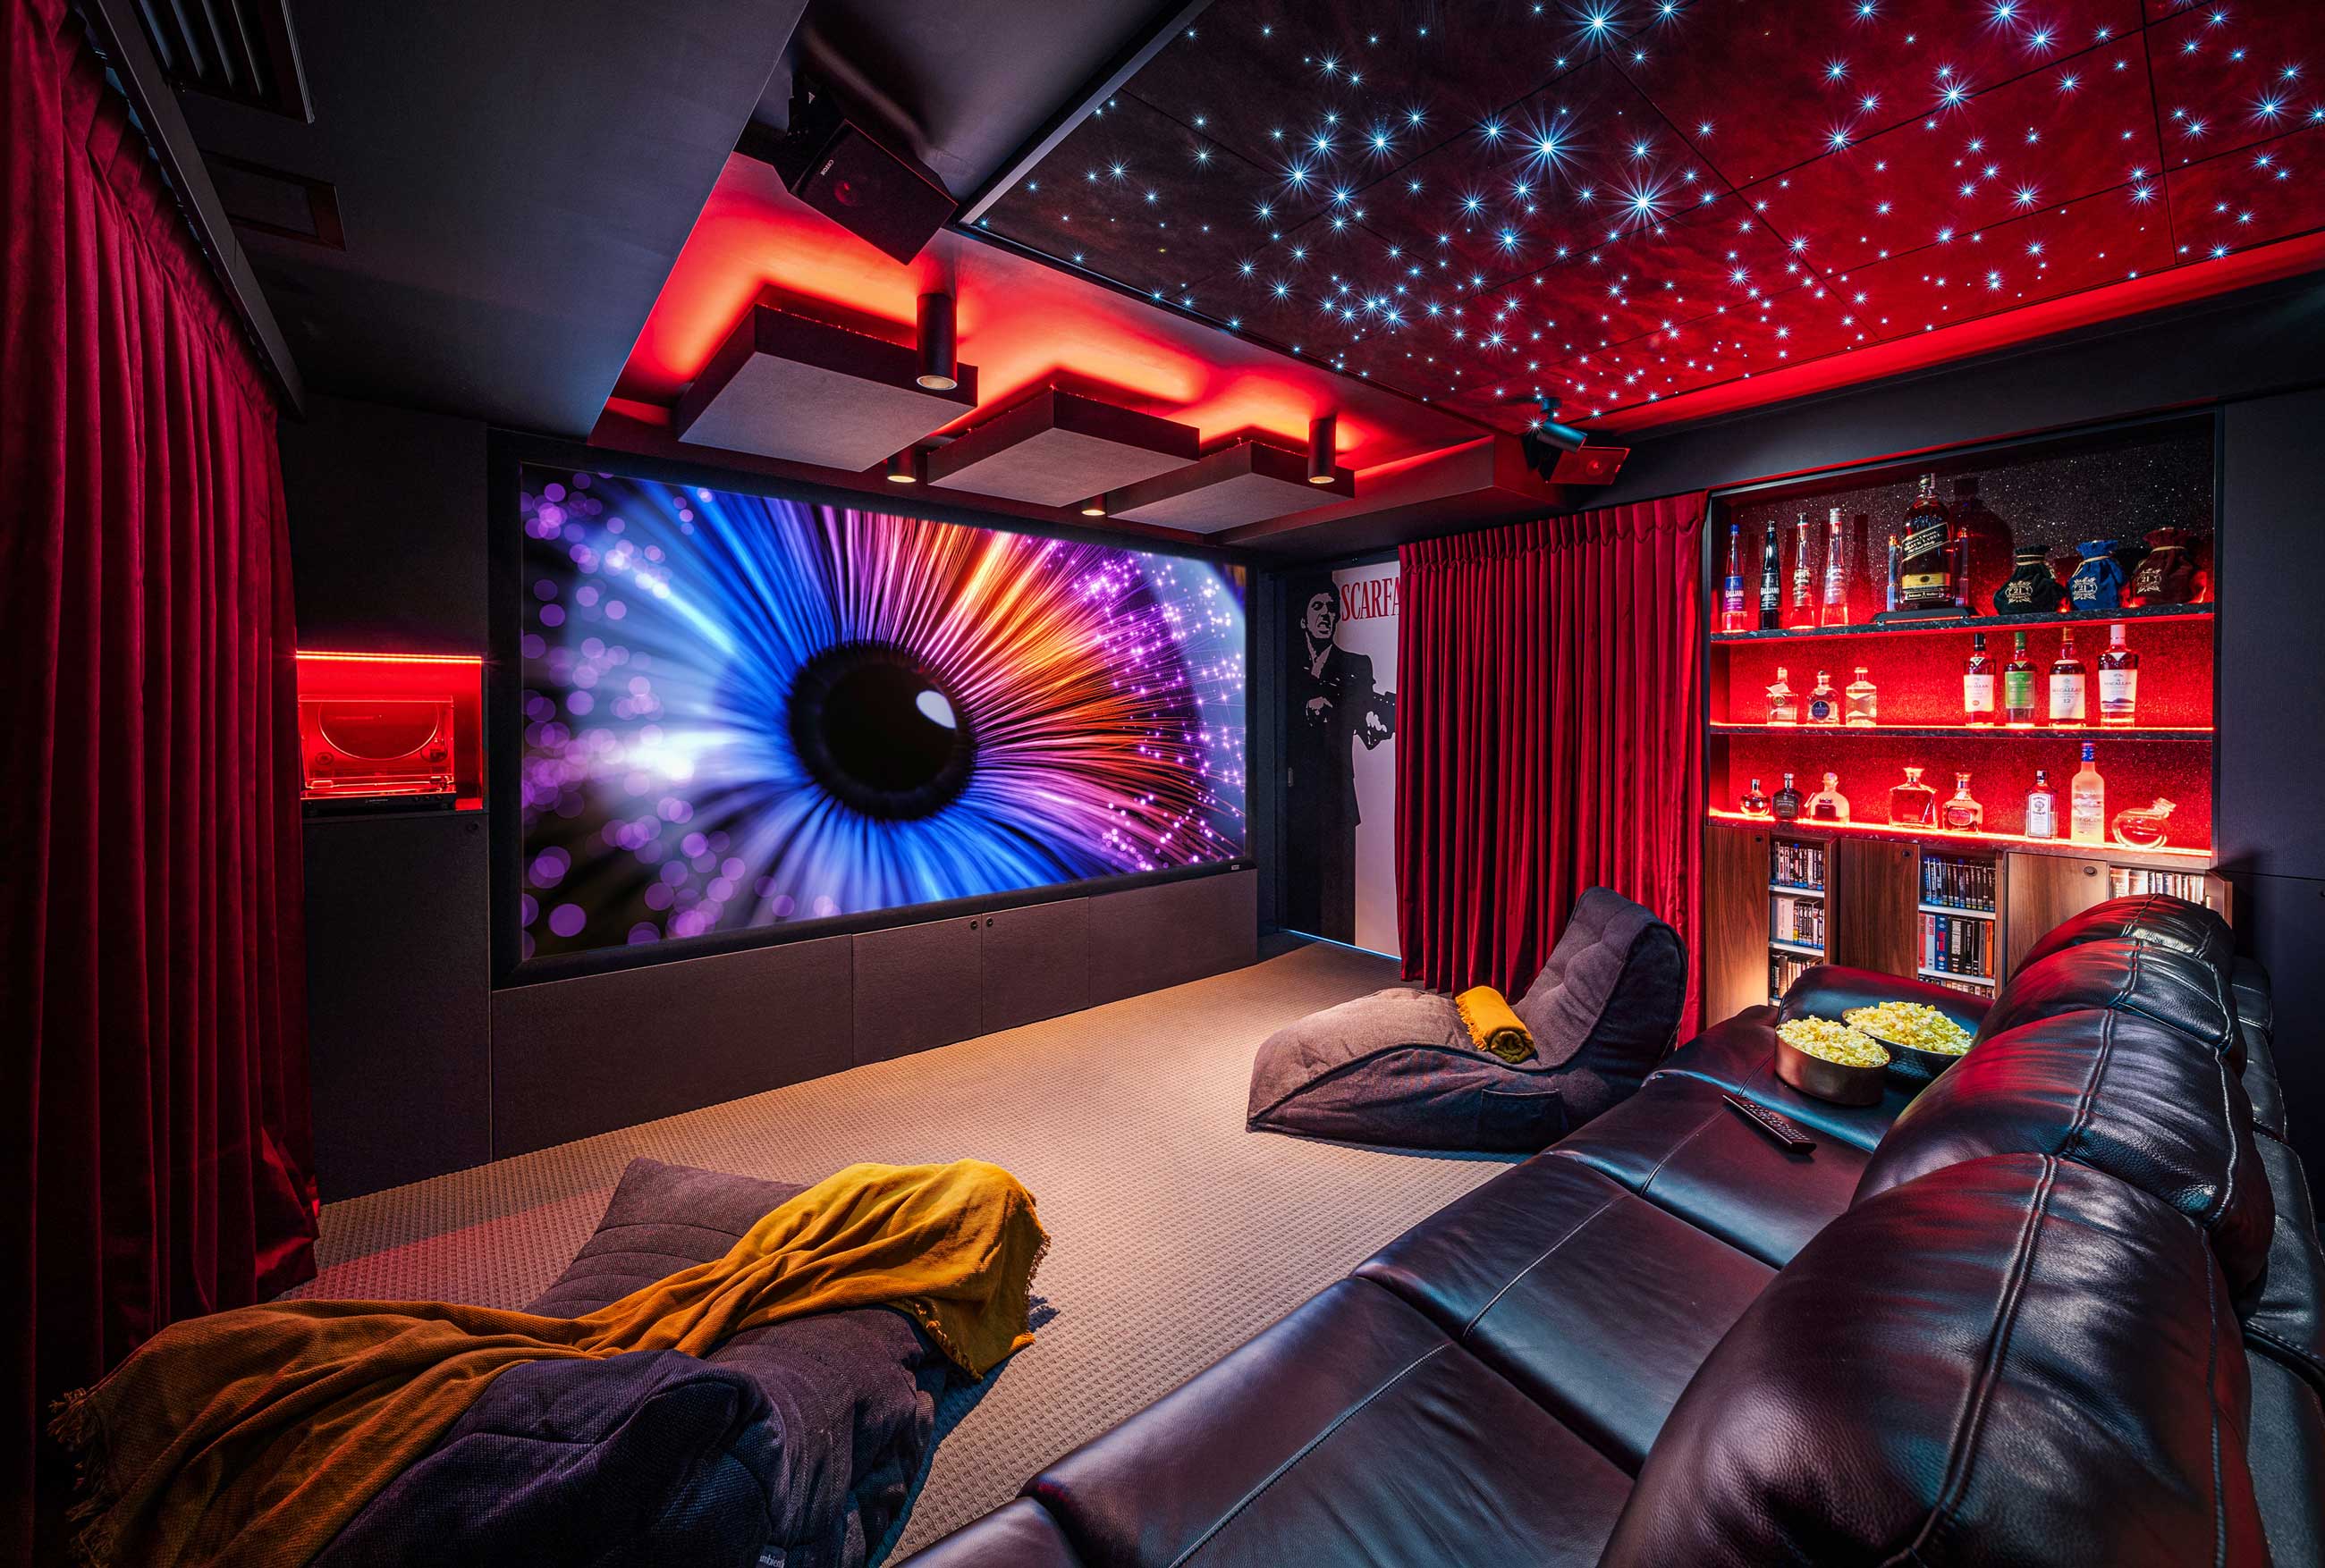 vagt Saucer professionel Aussie home theatre rooms: Total upgrade! | What Hi-Fi?